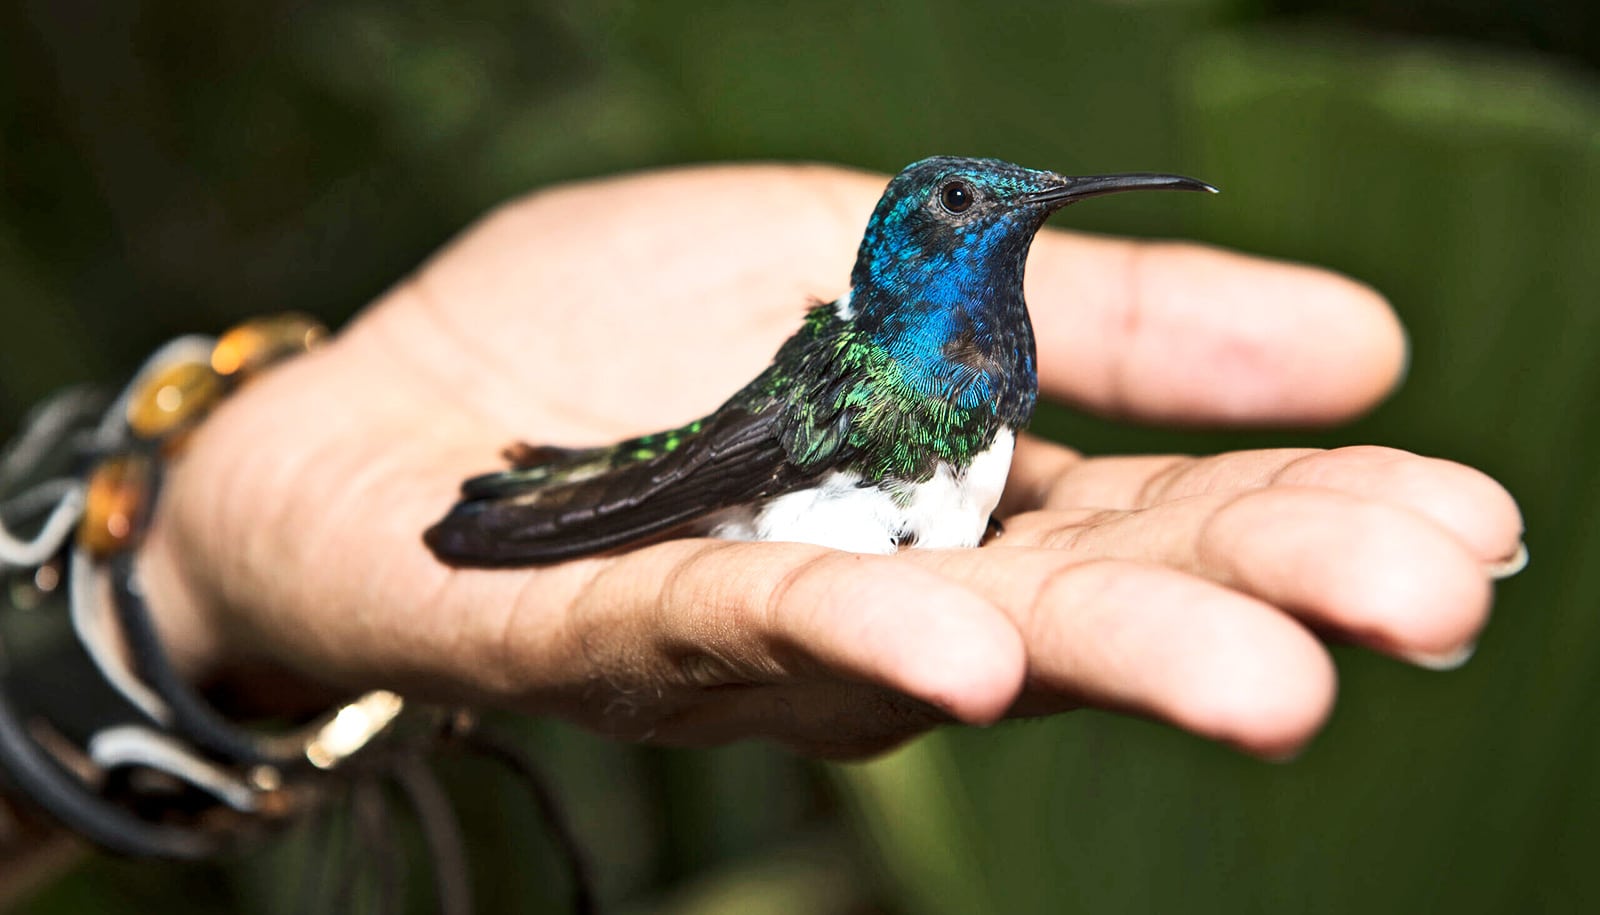 Colorful bird feathers may explain evolution paradox - Futurity